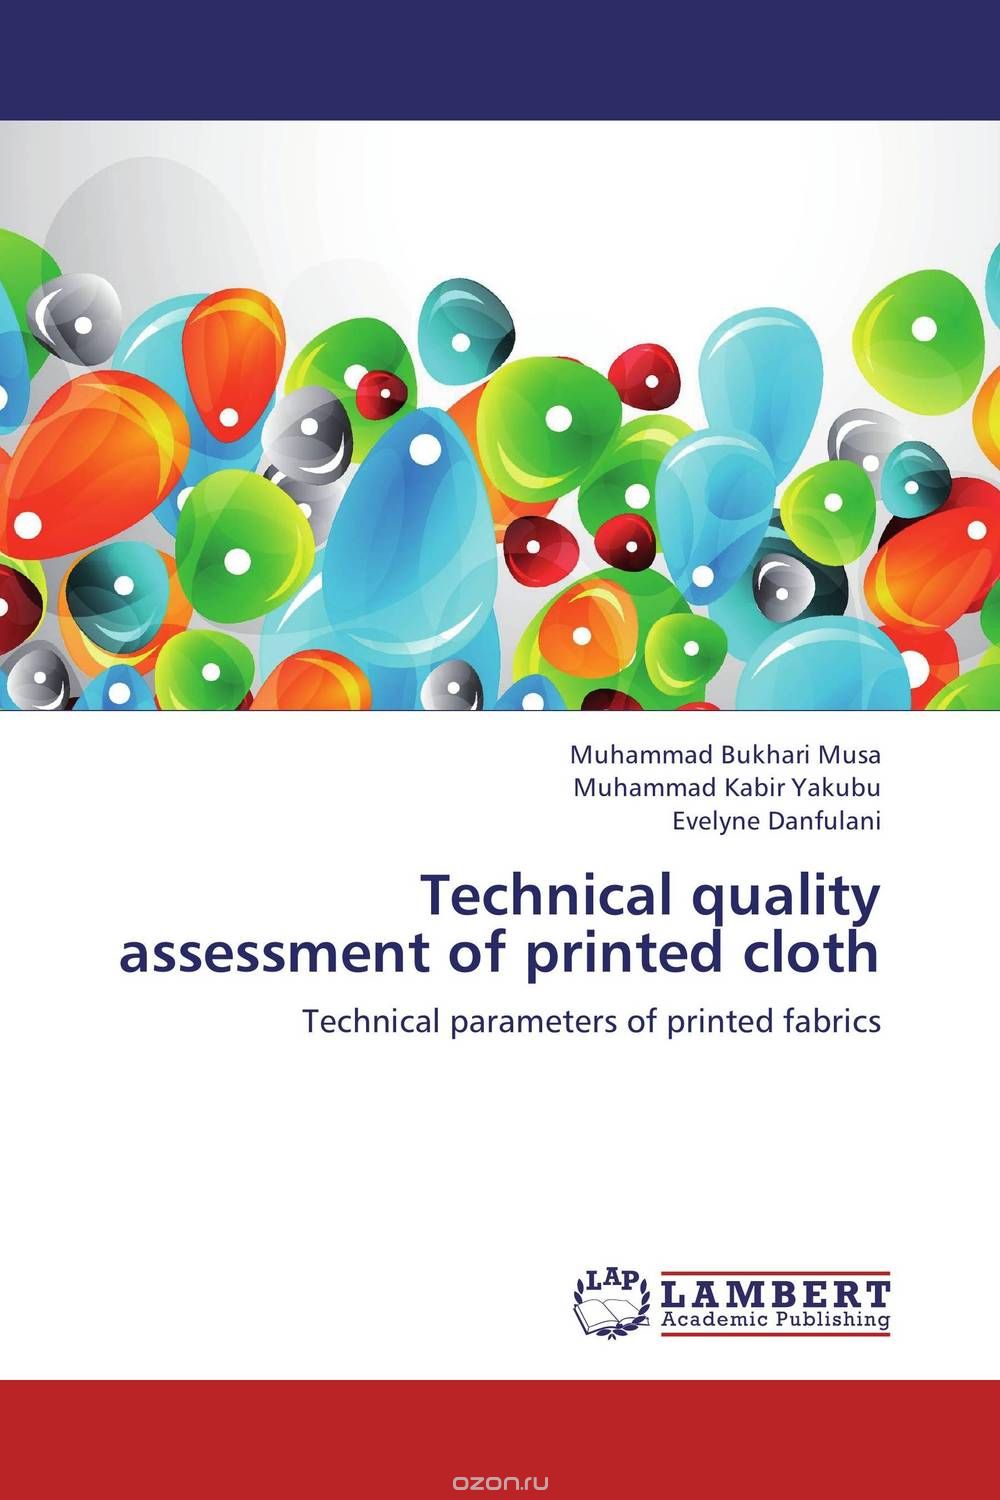 Скачать книгу "Technical quality assessment of printed cloth"